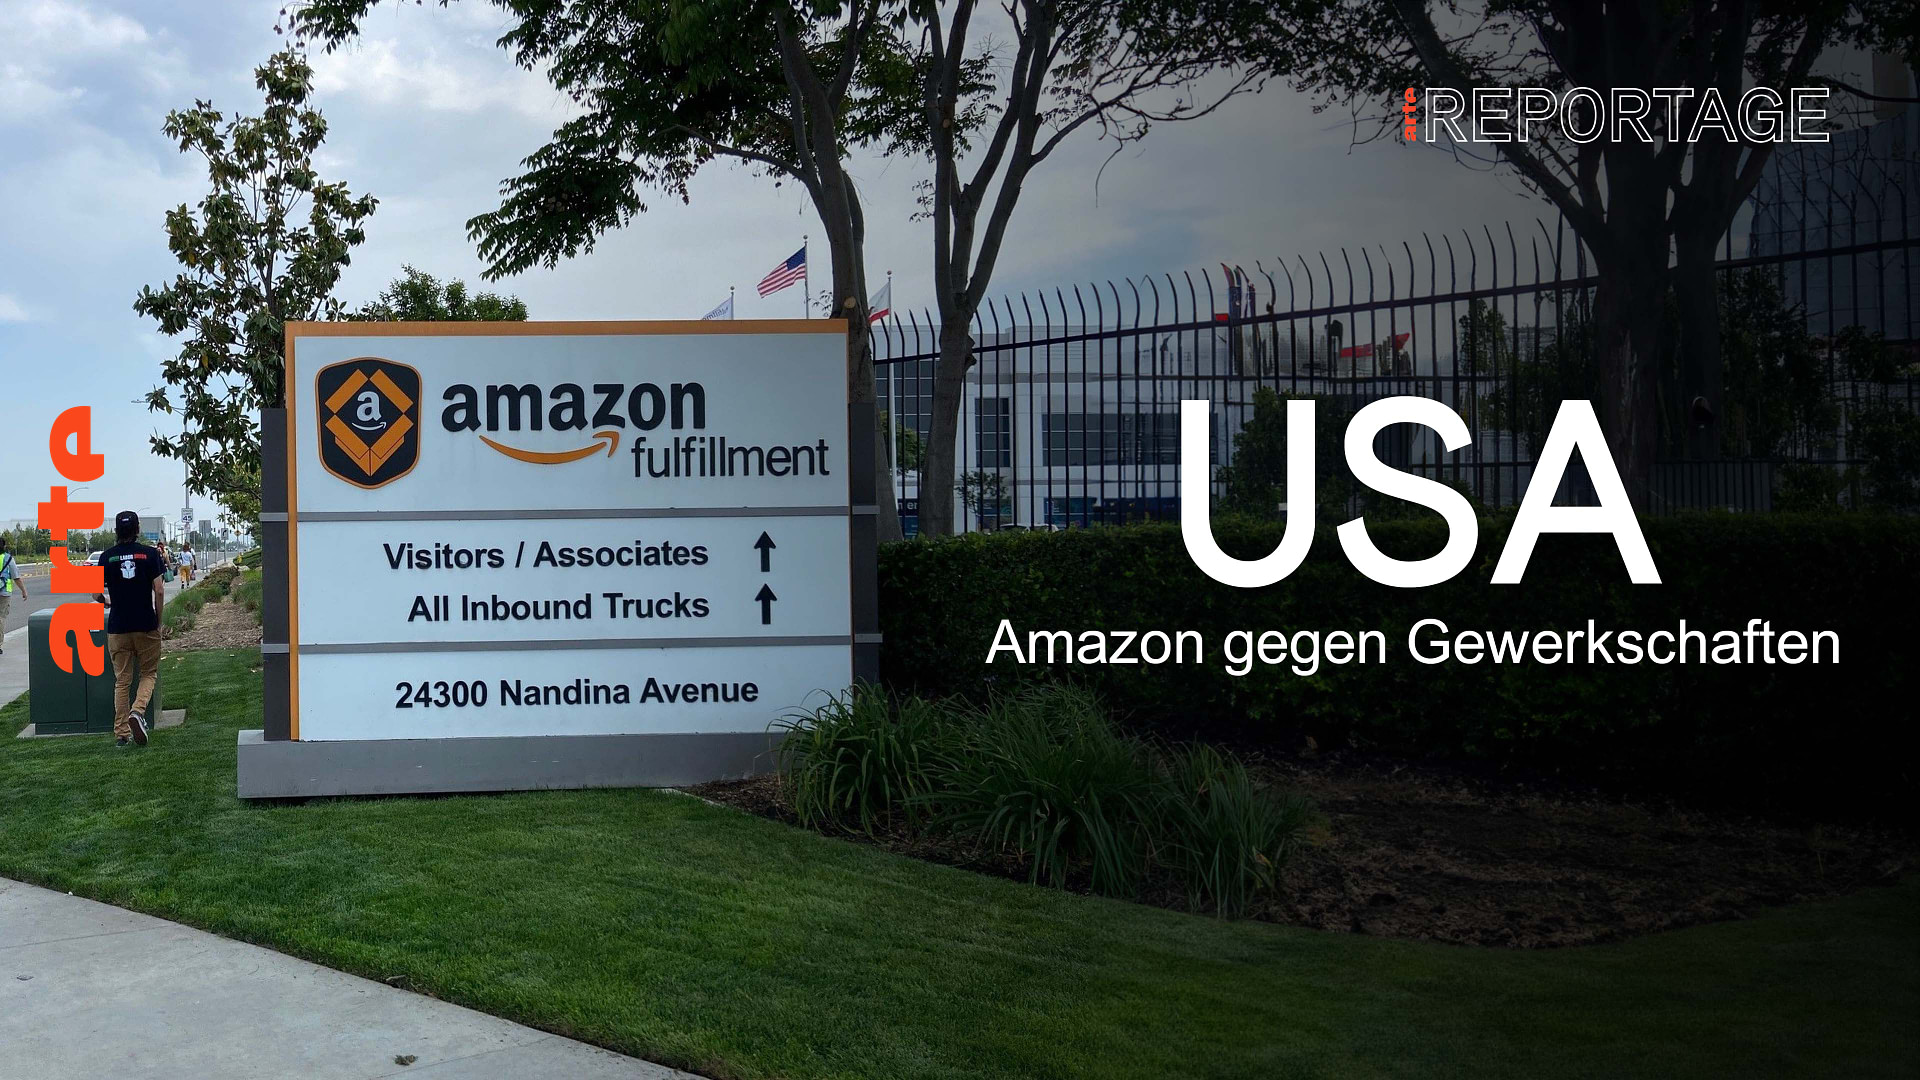 USA: Amazon gegen Gewerkschaften